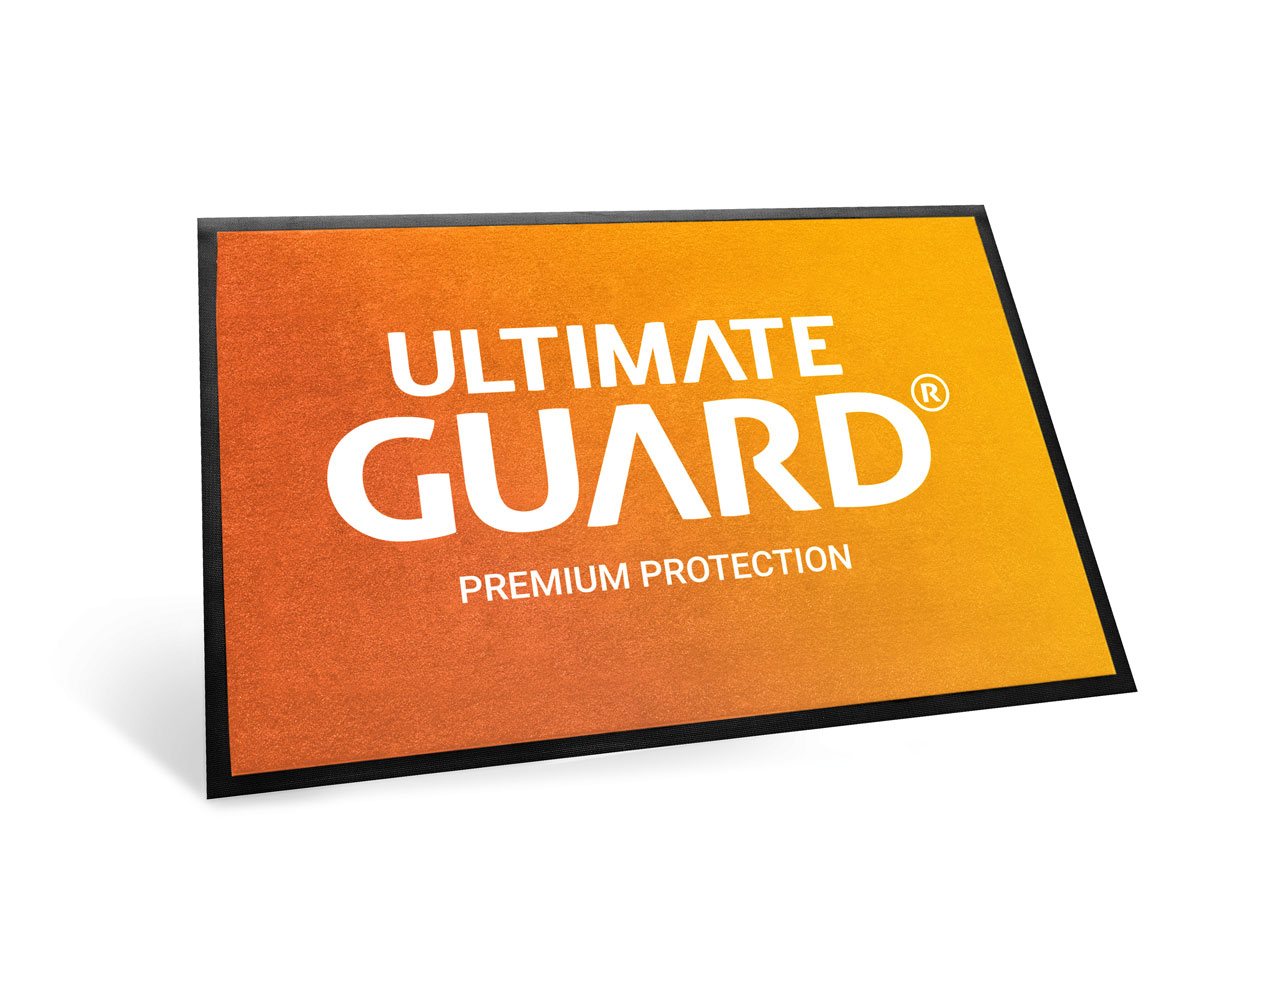 Ultimate Guard Store Carpet 60 x 90 cm Orange Gradient - Collector4U